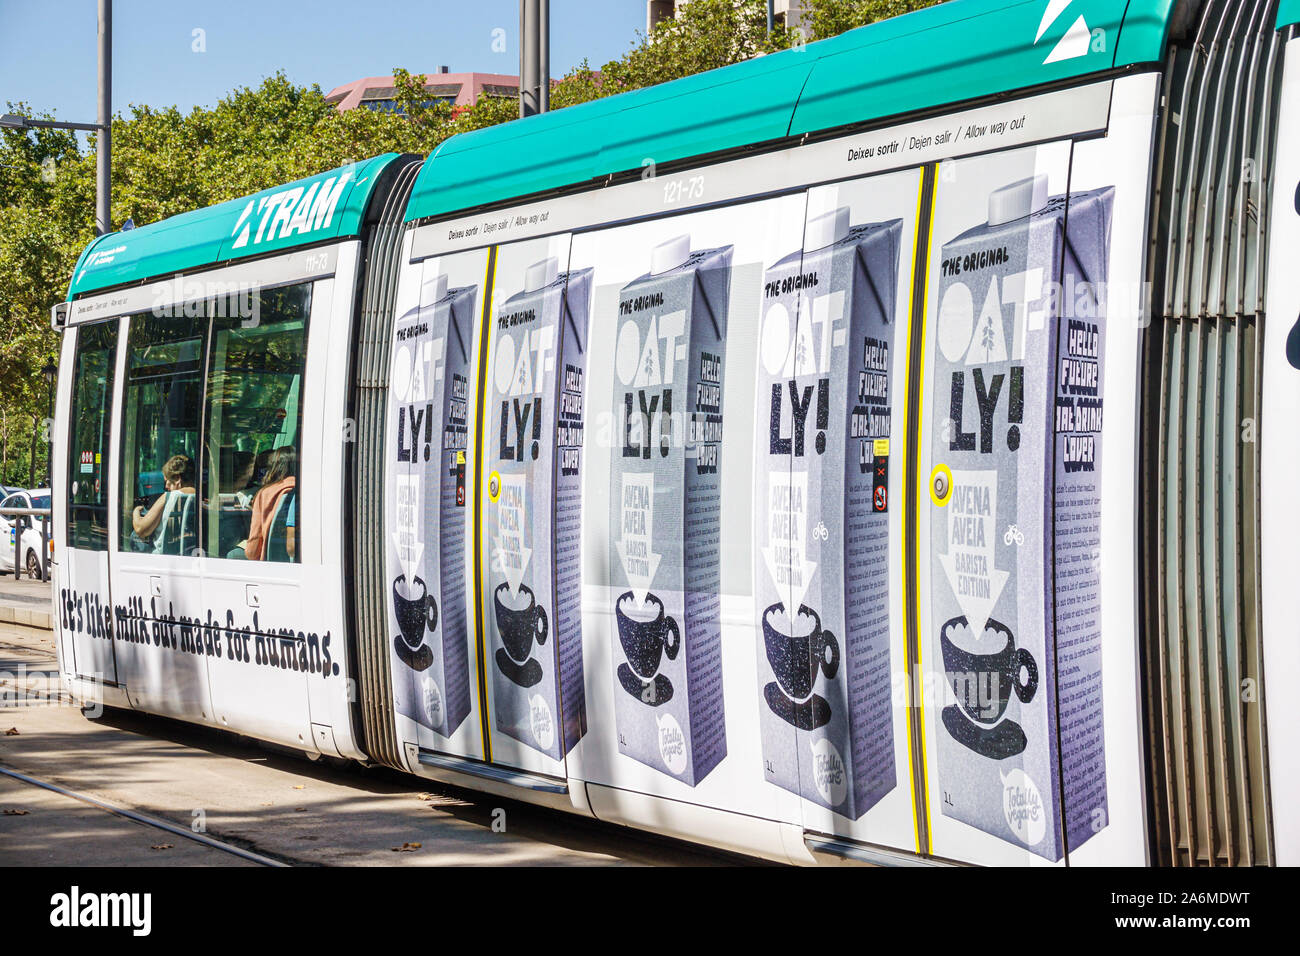 Barcelona Spain,Catalonia Les Corts,tram,exterior,Trambaix,light rail,English language ad advertising,Oatly,oatmilk,ES190904043 Stock Photo